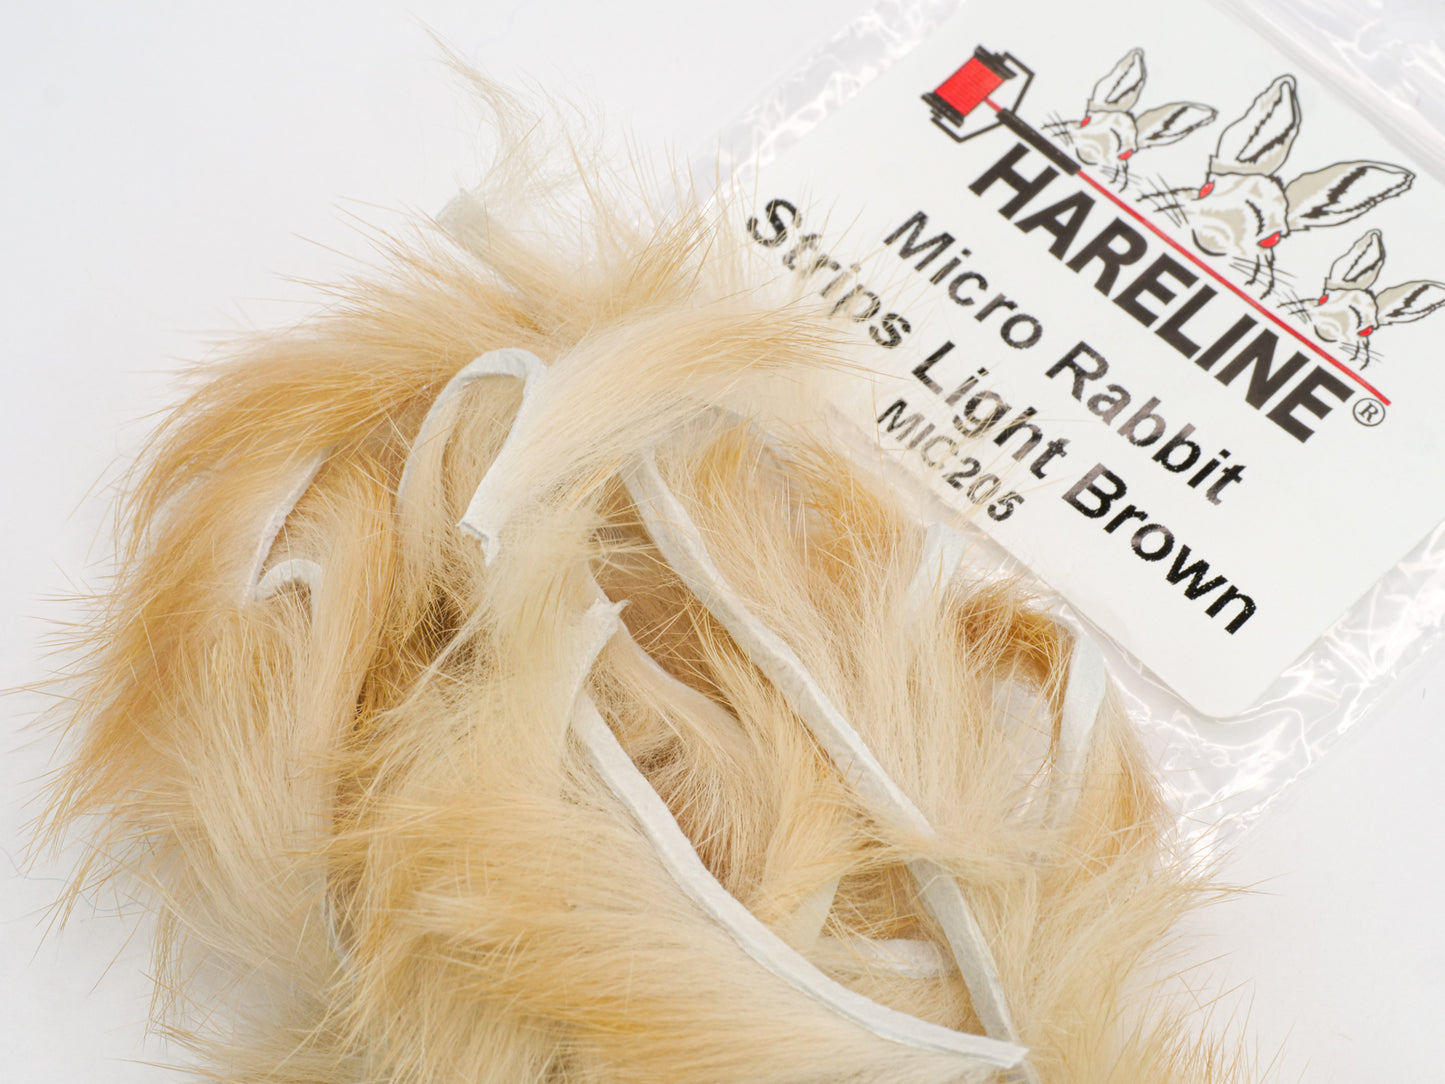 Hareline Micro Rabbit Strips